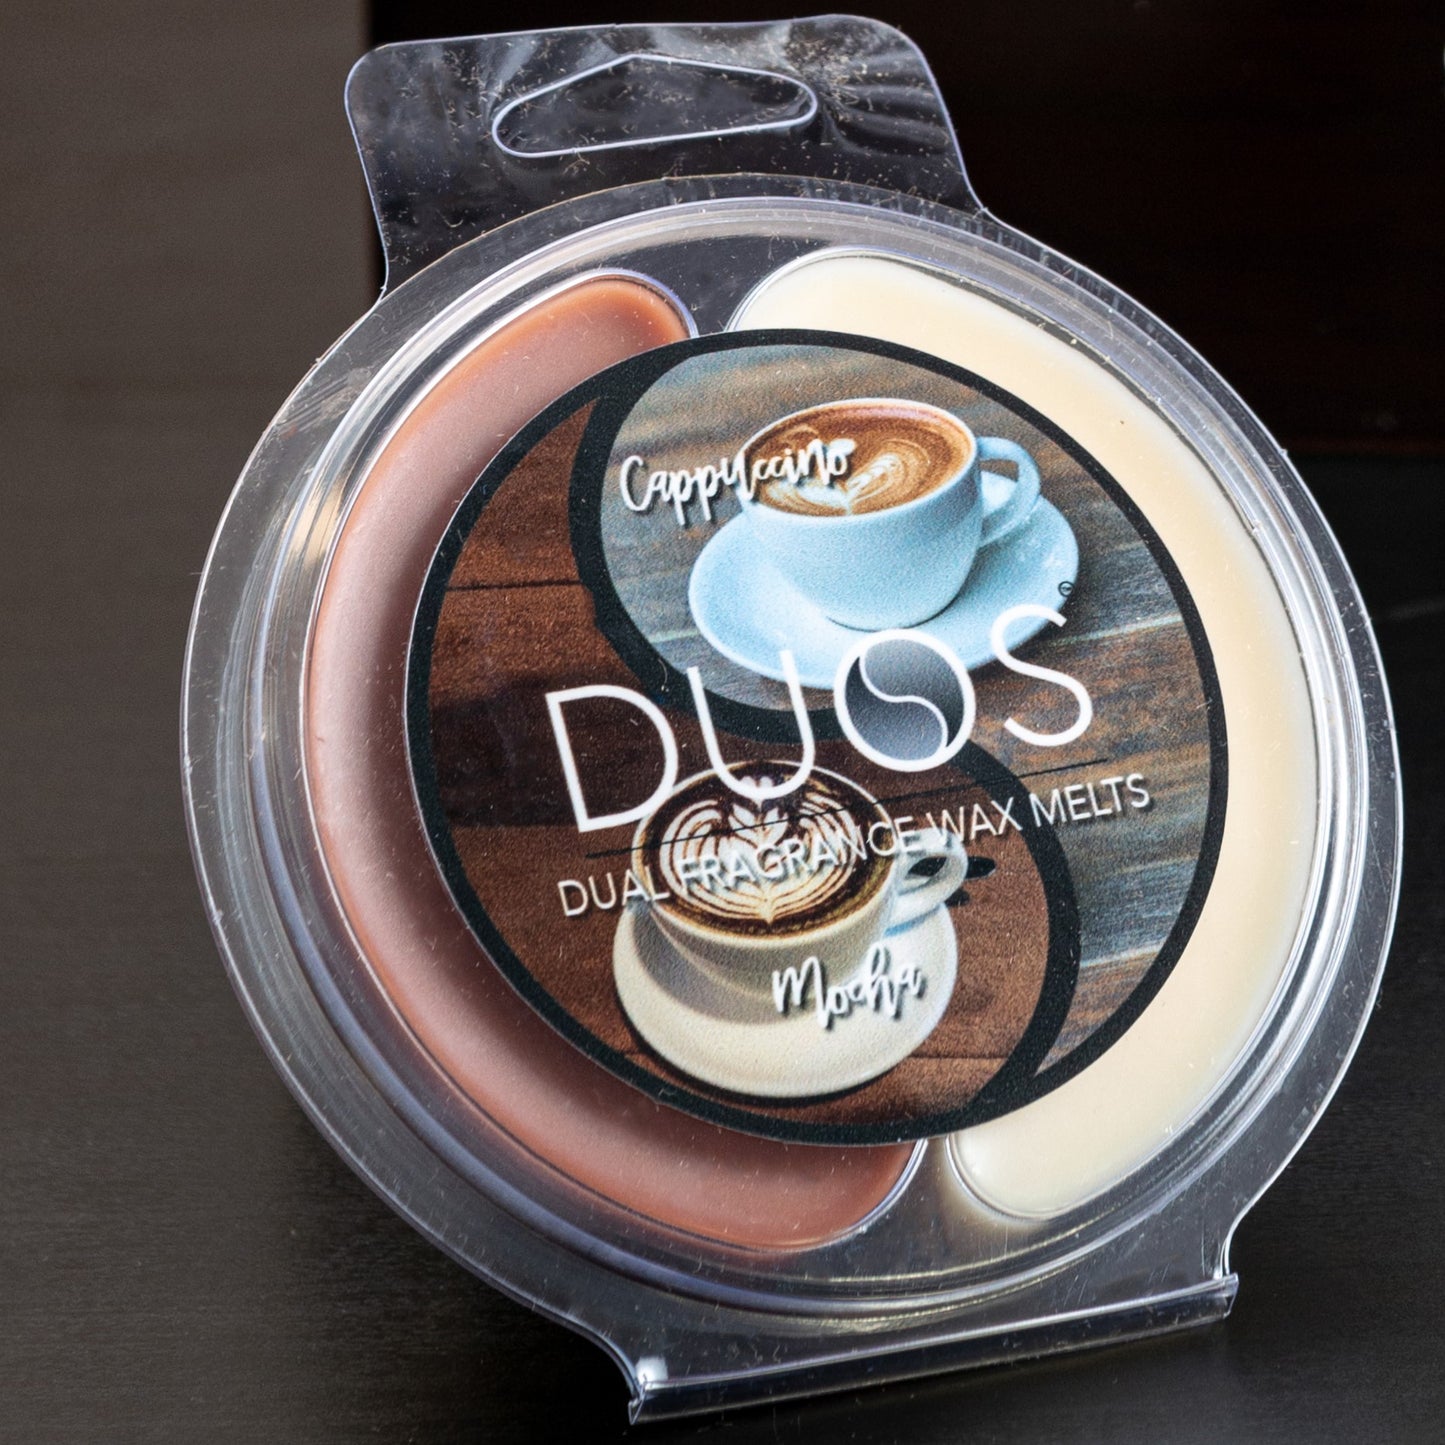 Cappuccino & Mocha DUO Dual Fragrance Wax Melts